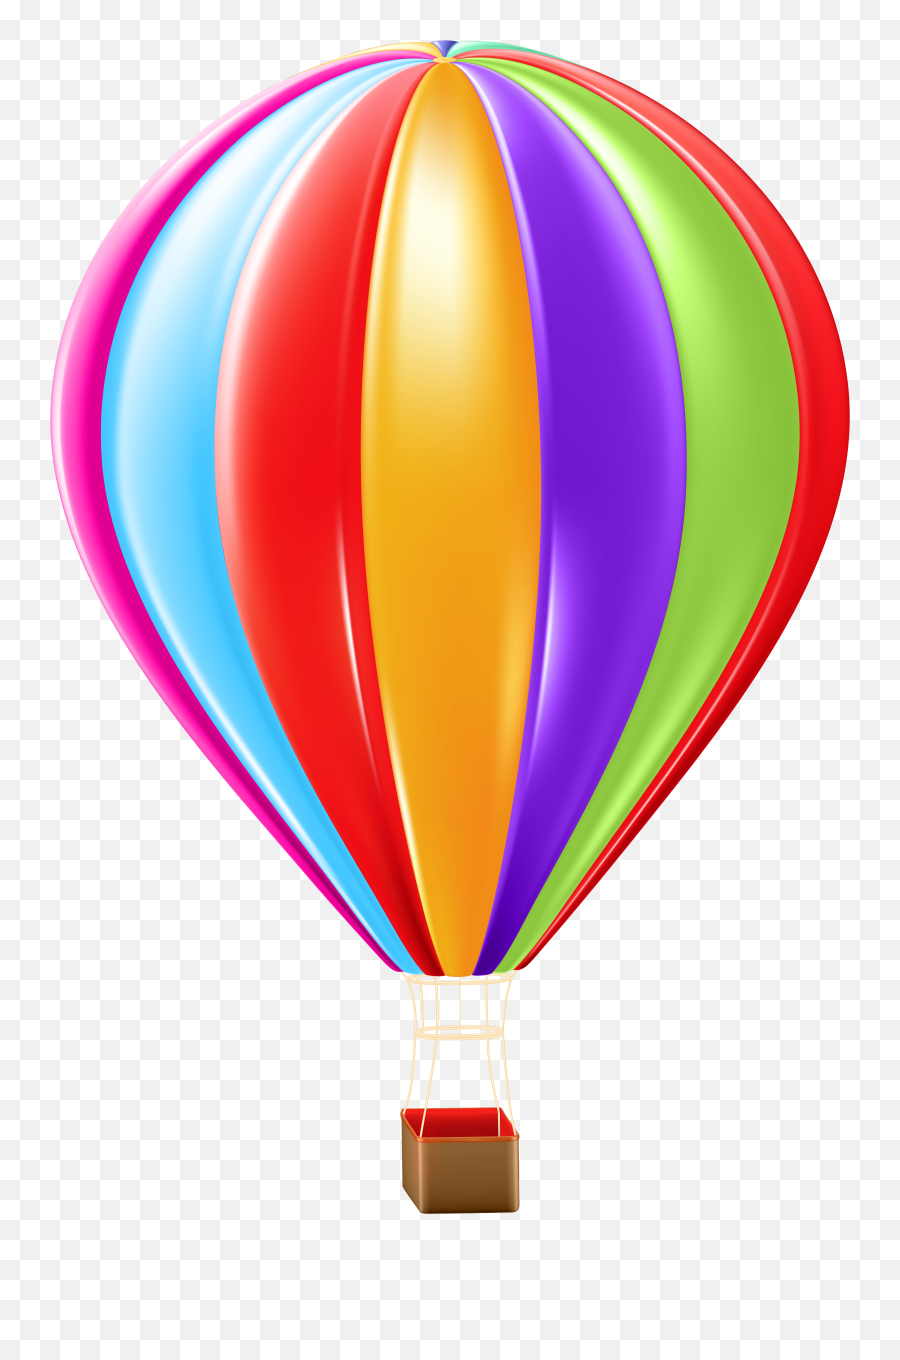 Hot Air Balloon Png Clip Art Image - Hot Air Balloon Clipart Clip Art Hot Air Balloon,Hot Air Balloon Transparent